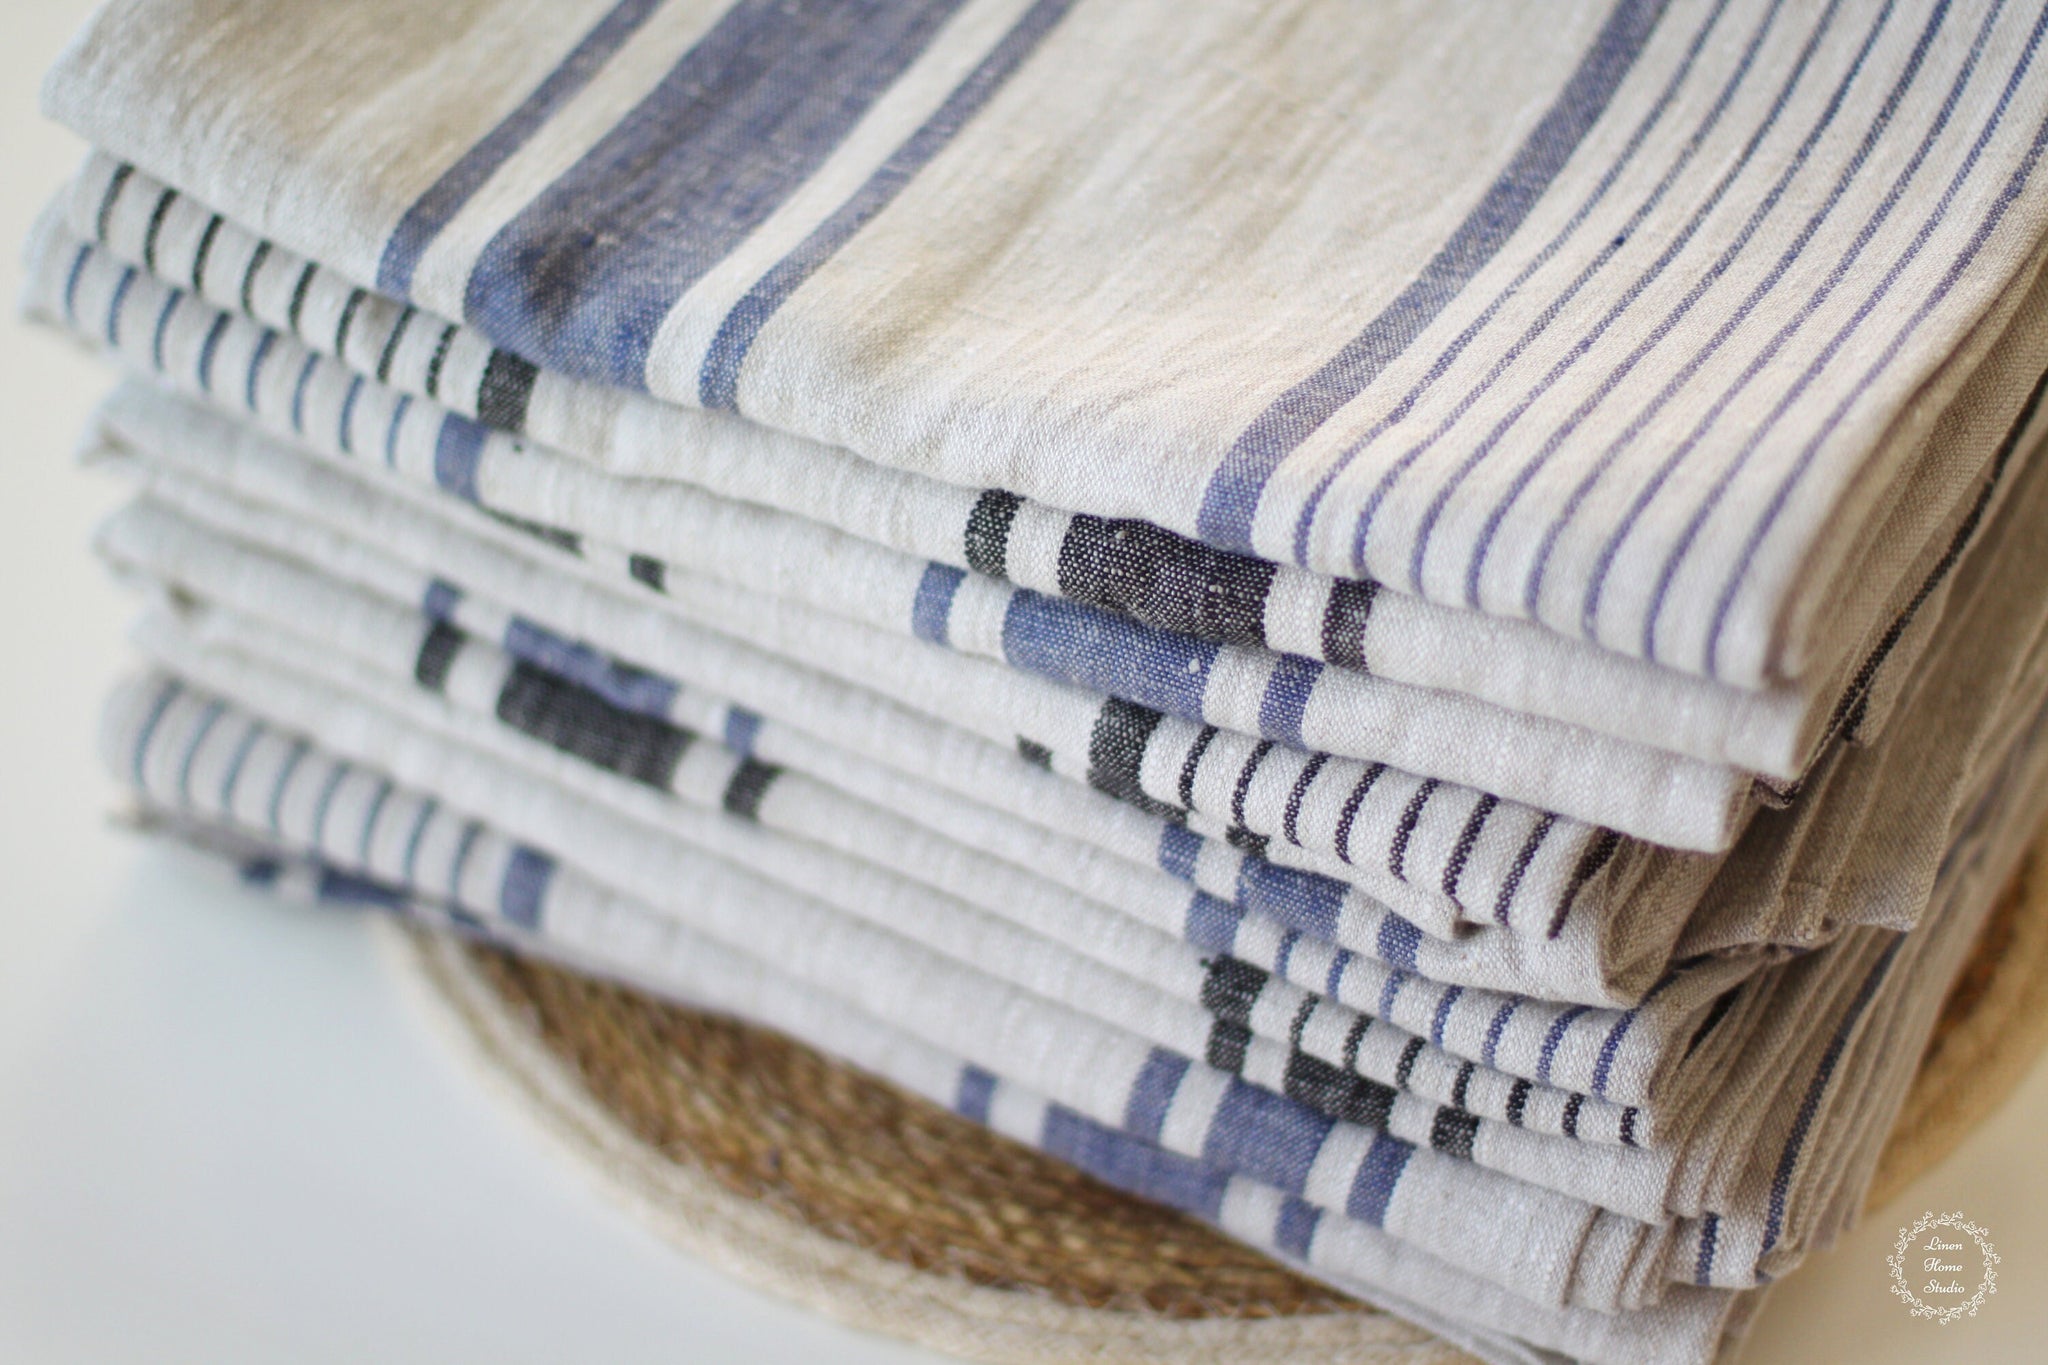 Striped Linen Towel, Softened Linen Bath Towel, Sauna Towel, Beach Sheet, Bath  Sheet, Large Bath Towel, Linen Beach Towel, Striped Towel 